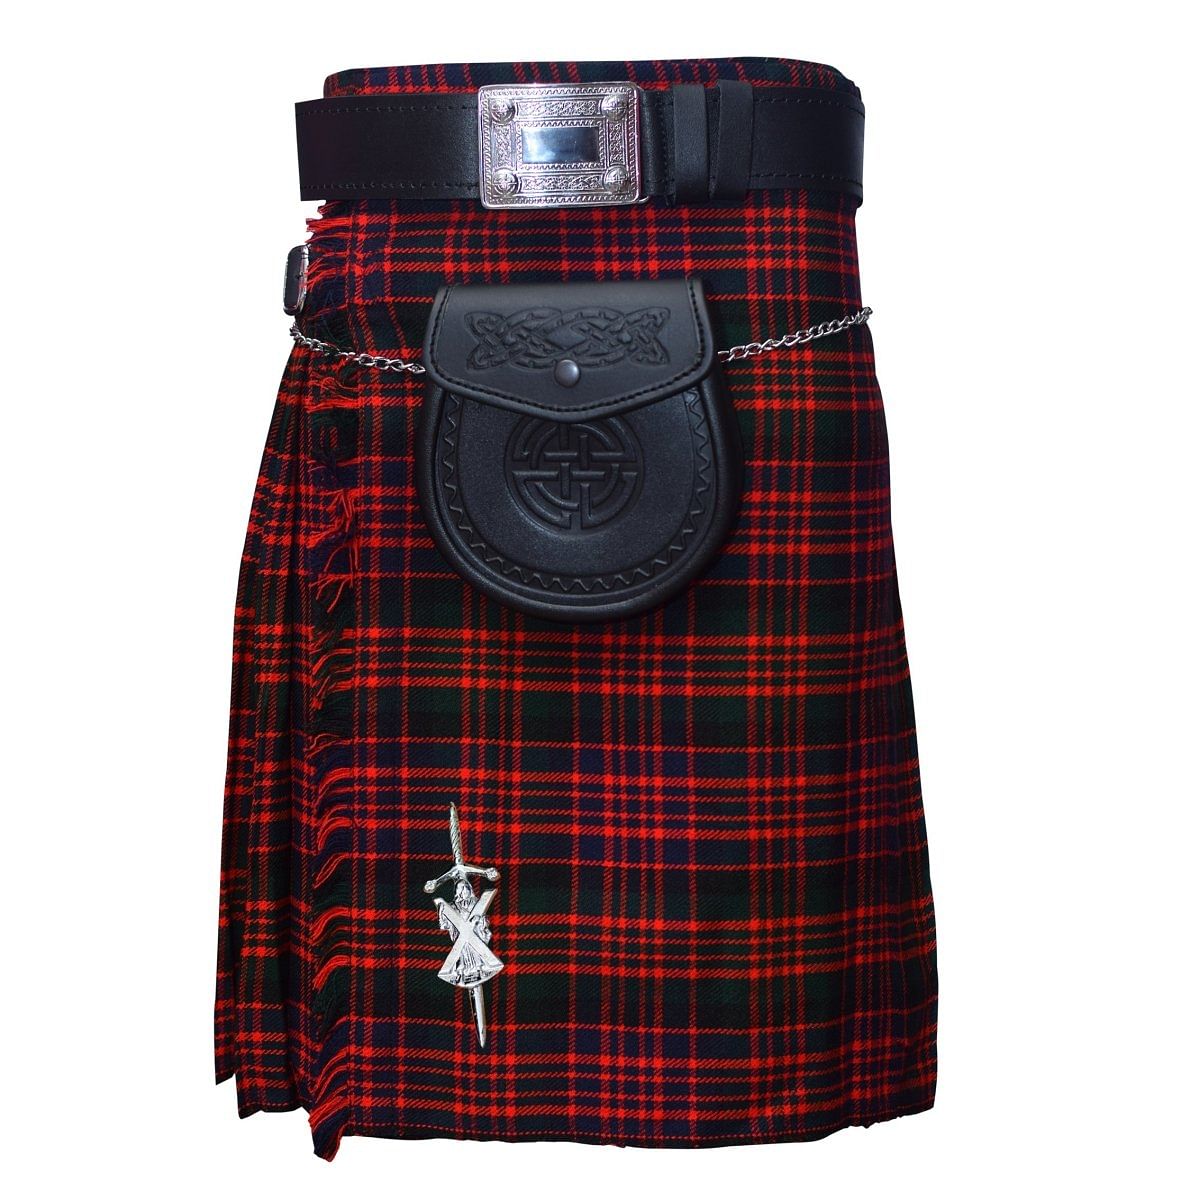 Macdonald Tartan Traditional Scottish Men's Kilt Outfit Thistle Pin, Buckle, Belt, Sporran Set - #Kilts Boutique#